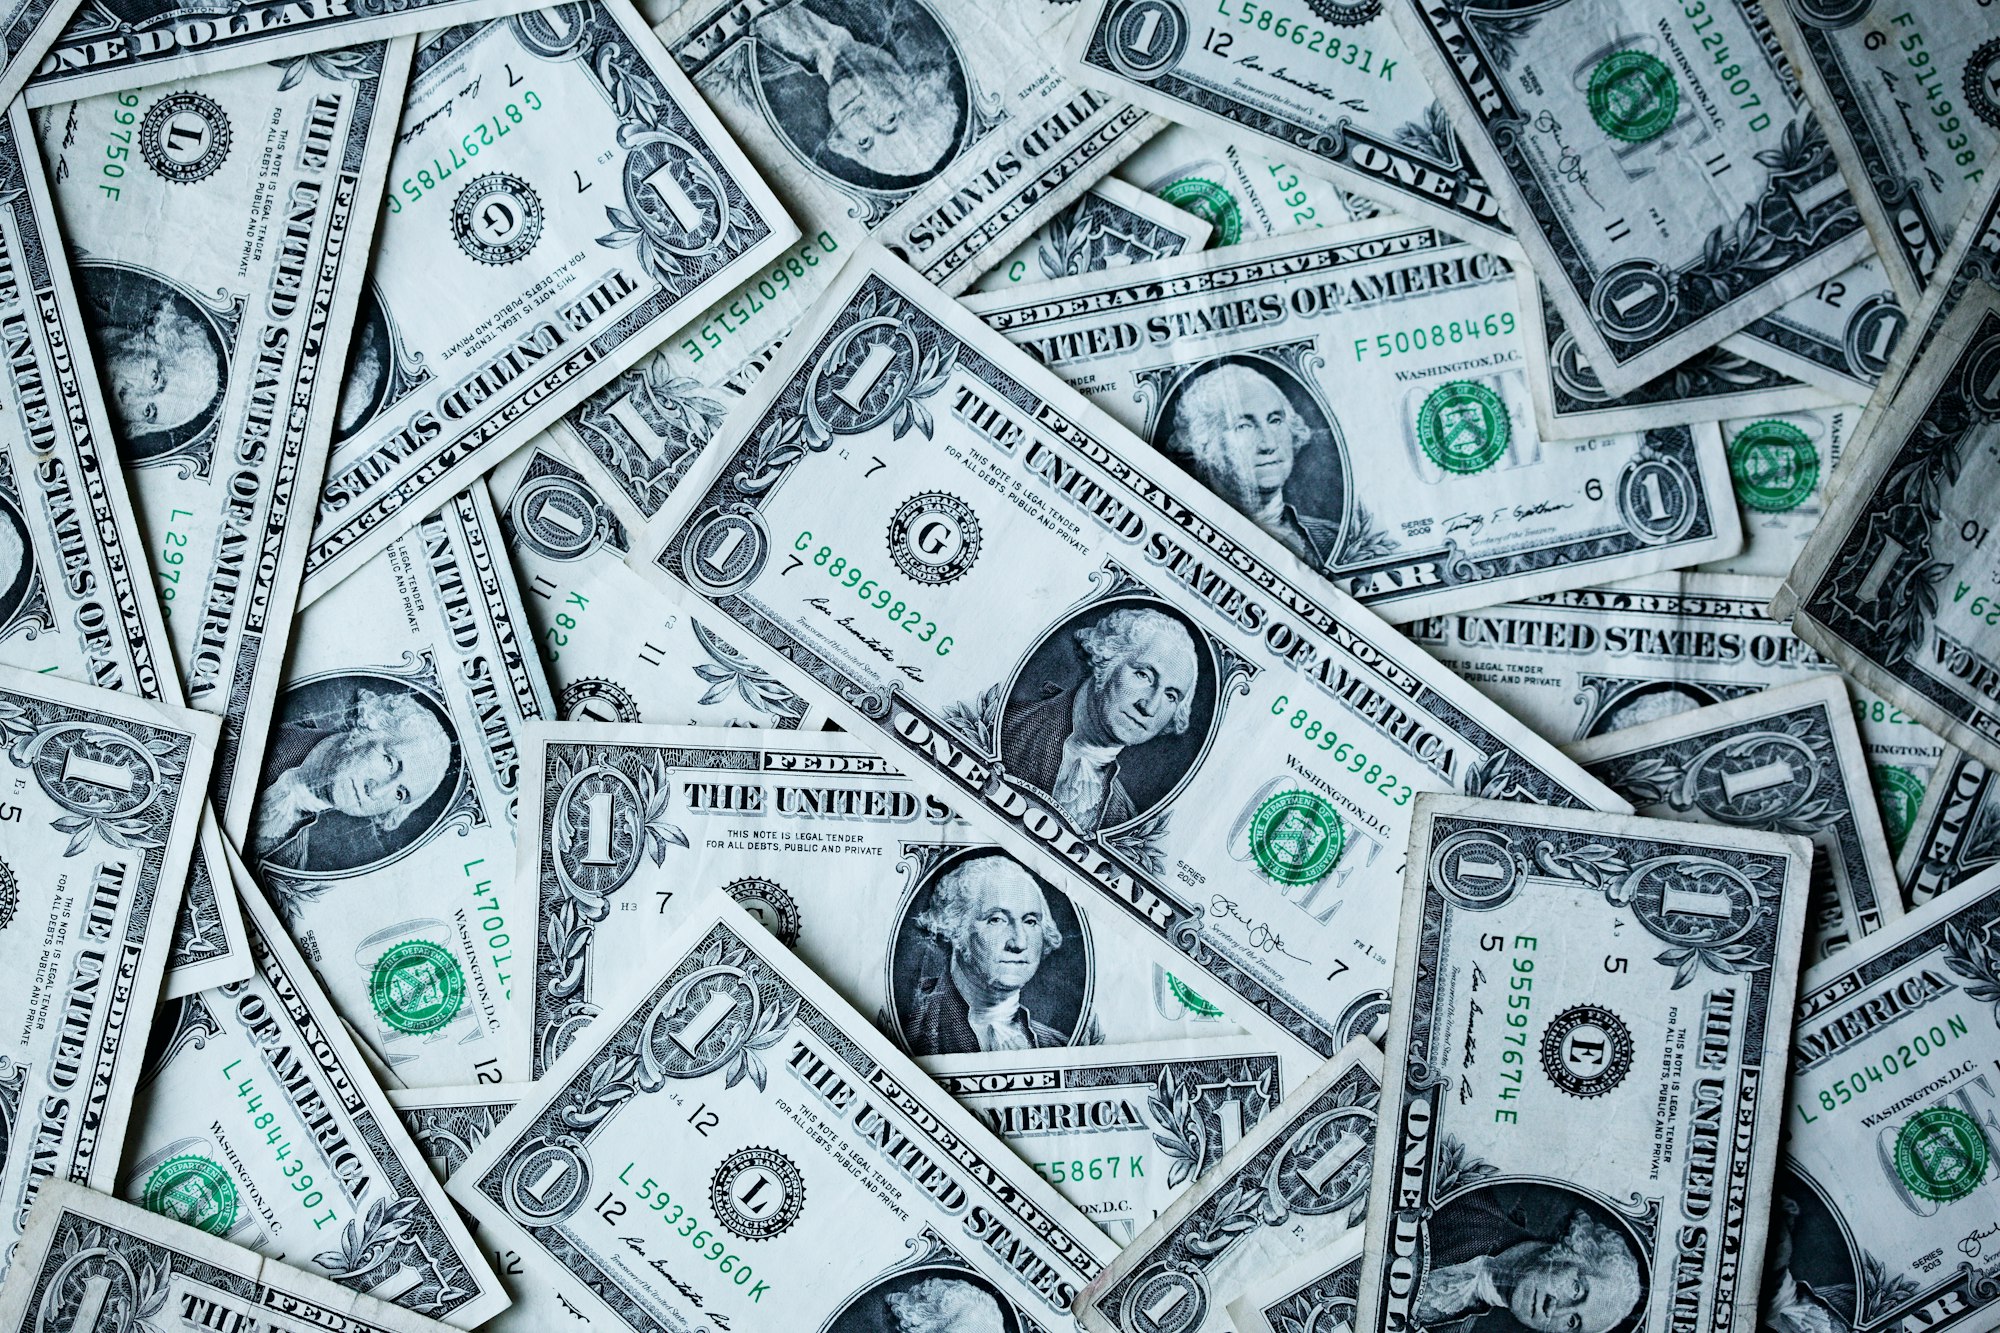 A collection of US Dollar bills make an interesting financial wallpaper.